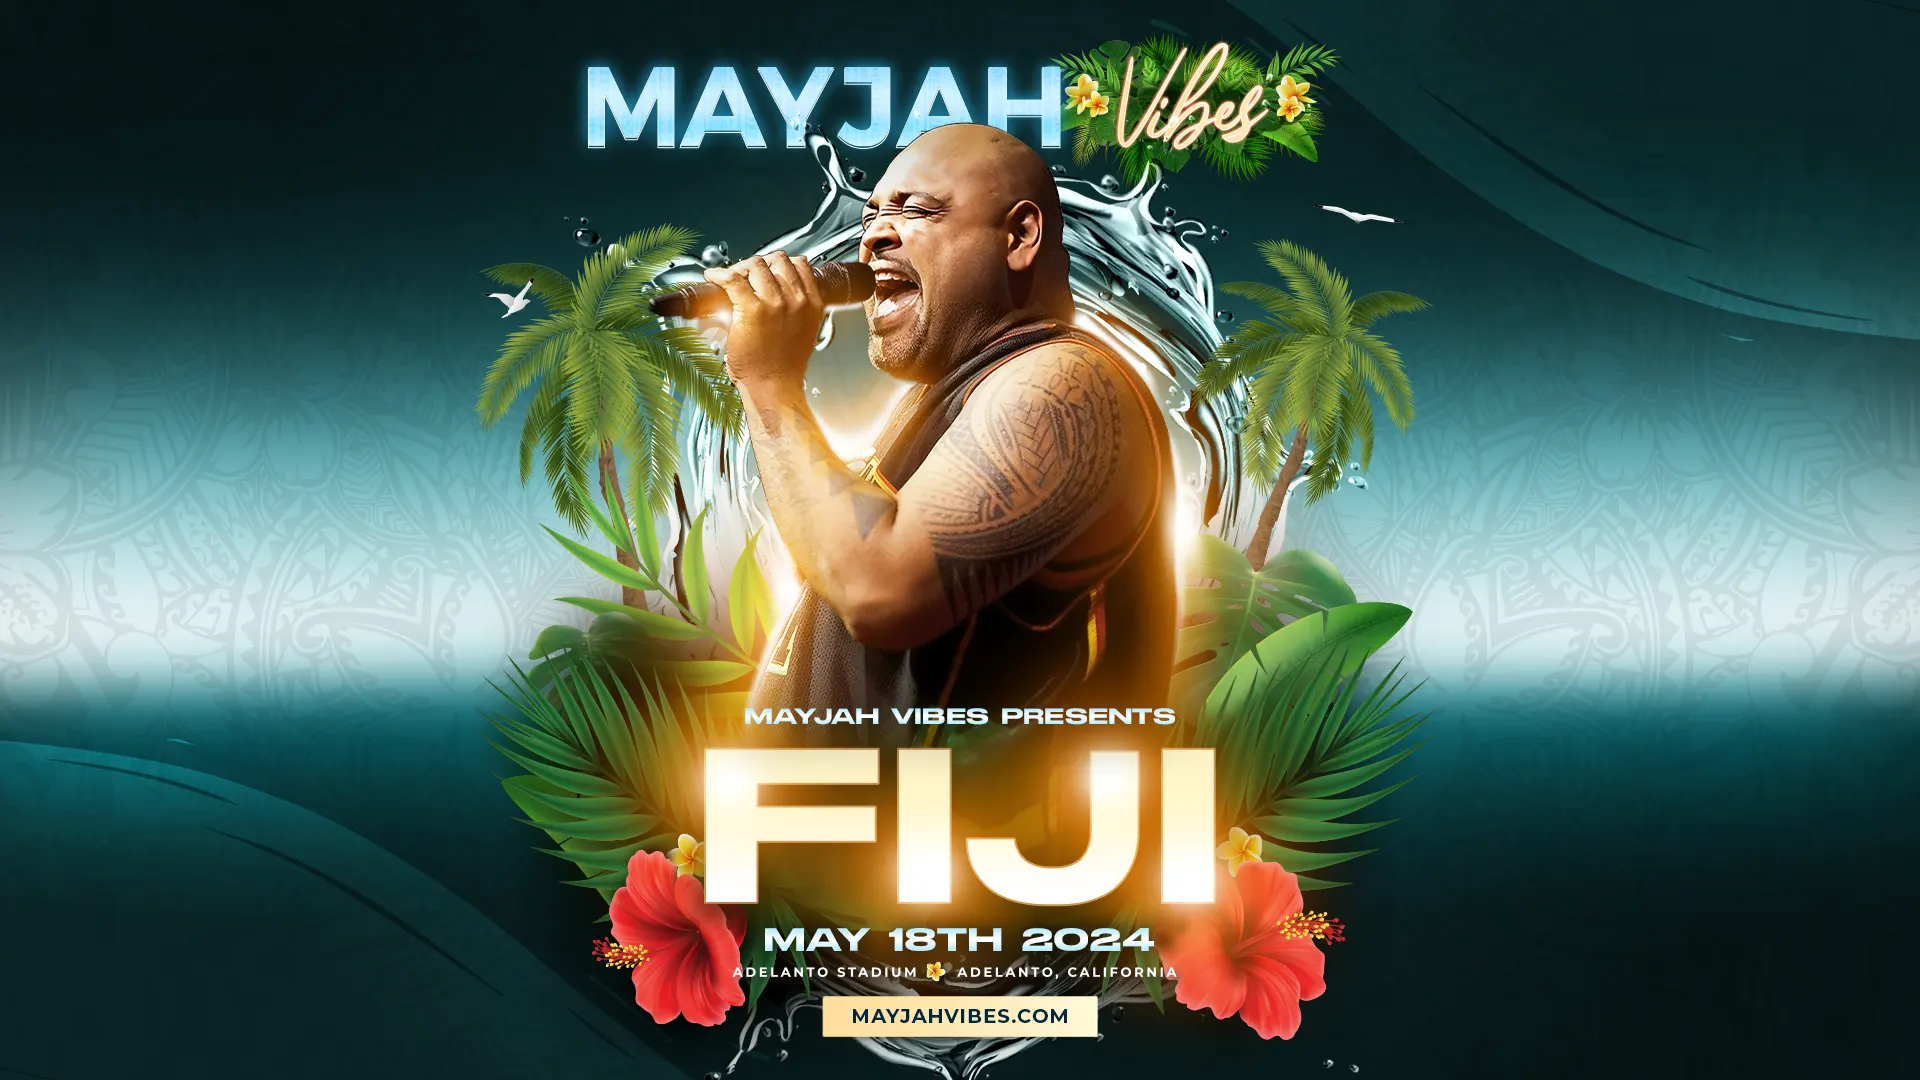 The Godfather of Island Reggae Fiji is returning to Adelanto California for Mayjah Vibes 2024